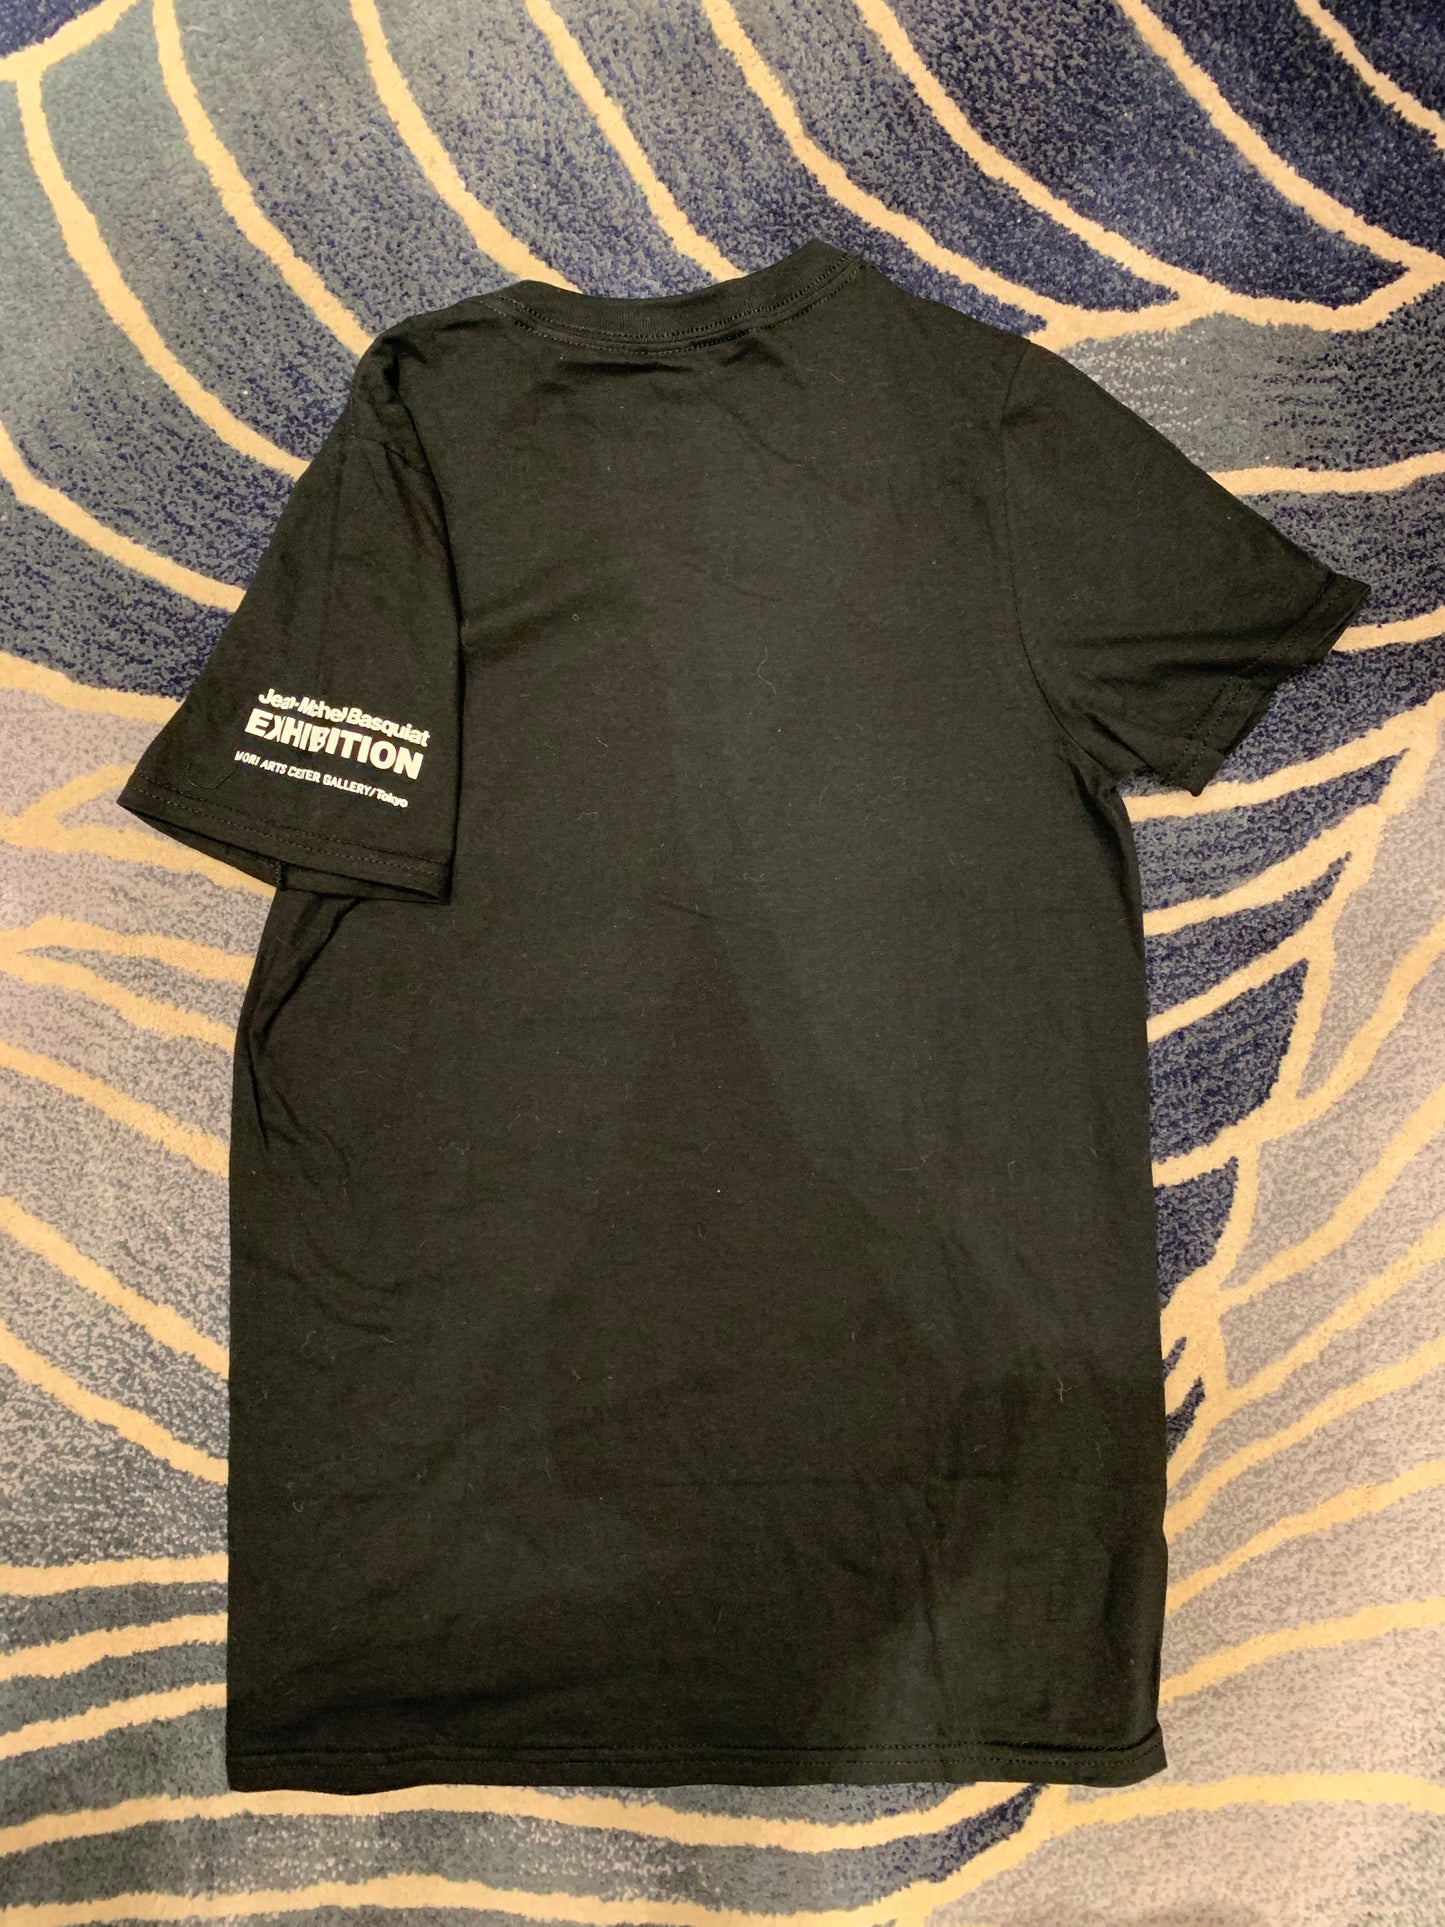 BASQUIAT - "Made in Japan I" T-shirt (Black) (XS), 2019